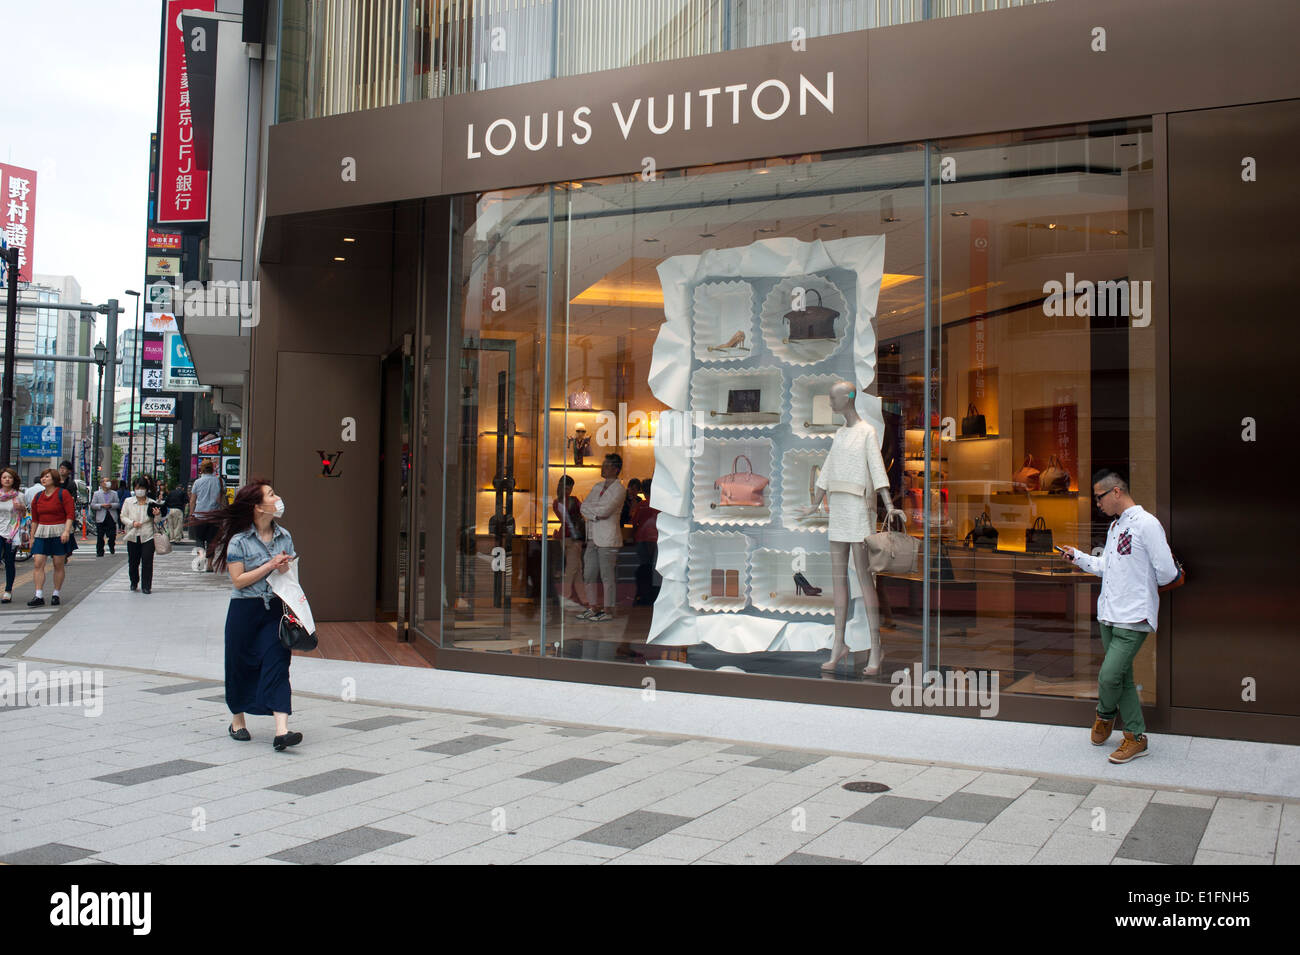 Tokyo Japan - Louis Vuitton Store in Ikebukuru district Stock Photo - Alamy